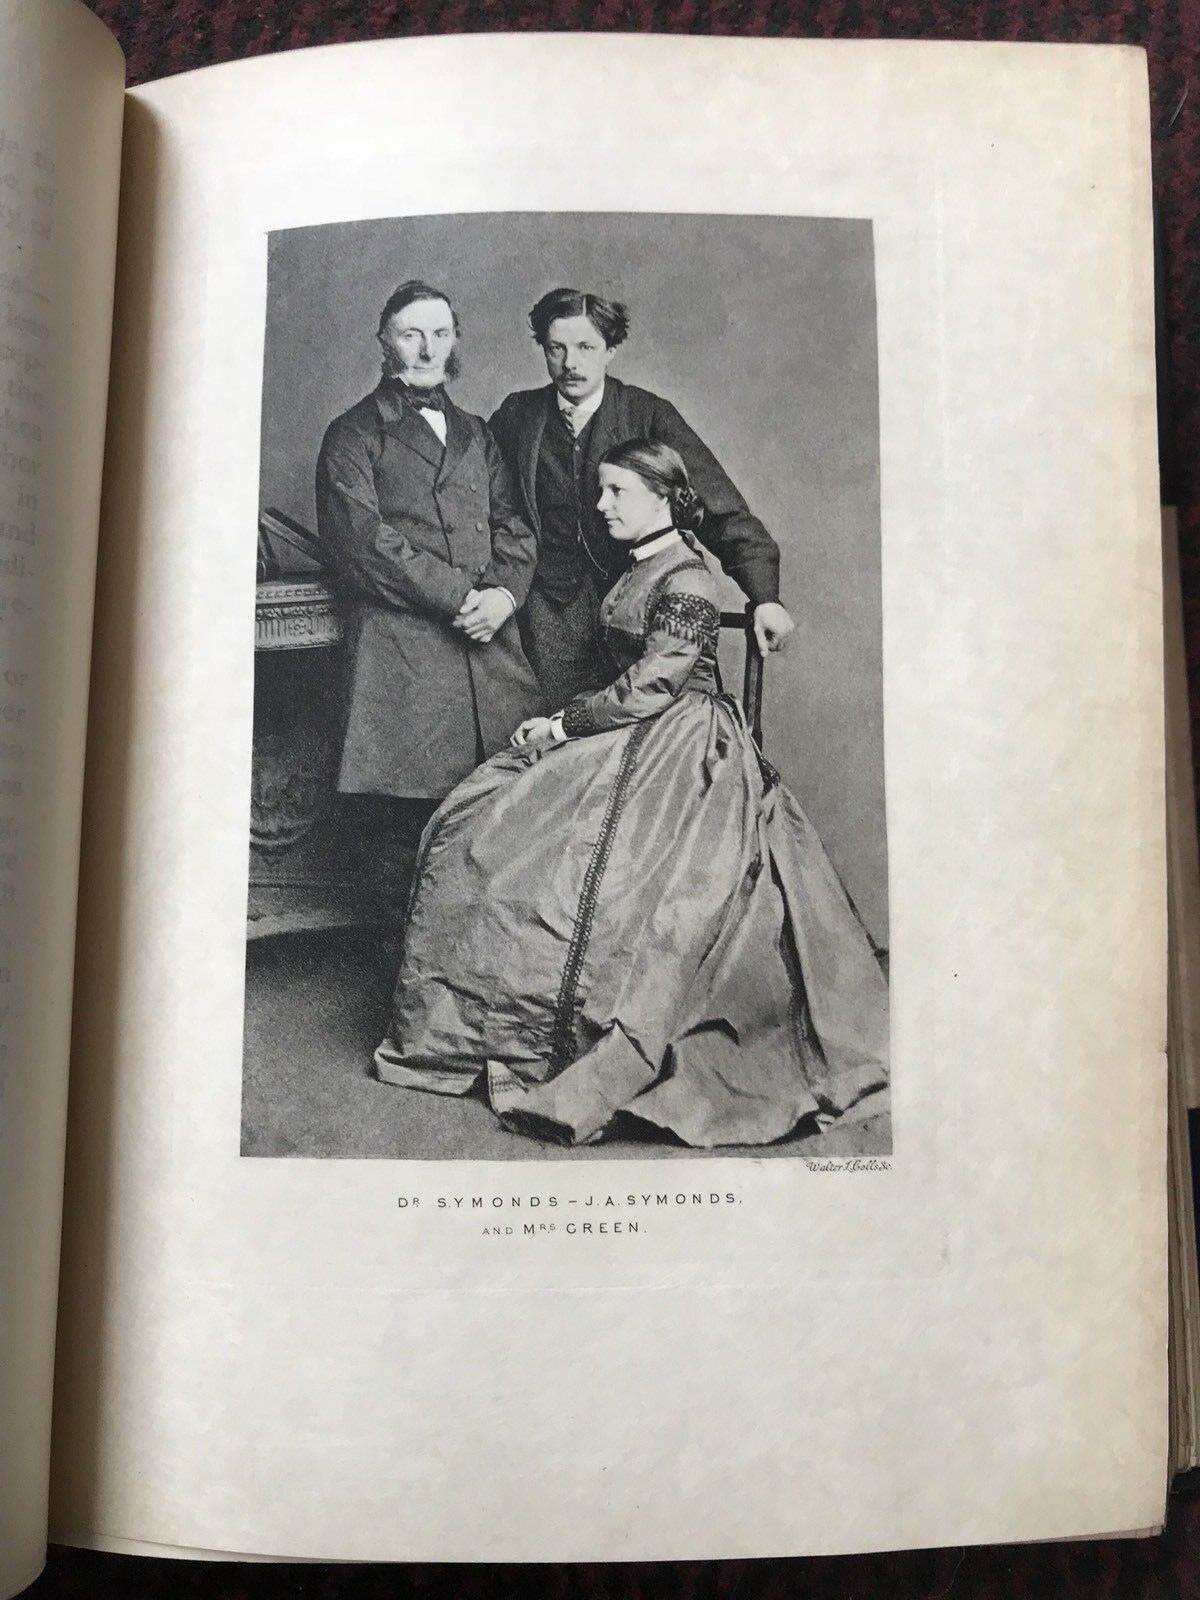 1895 - John Addington Symonds - A Biography Illustrated - Fine Bindings (2 Vols)